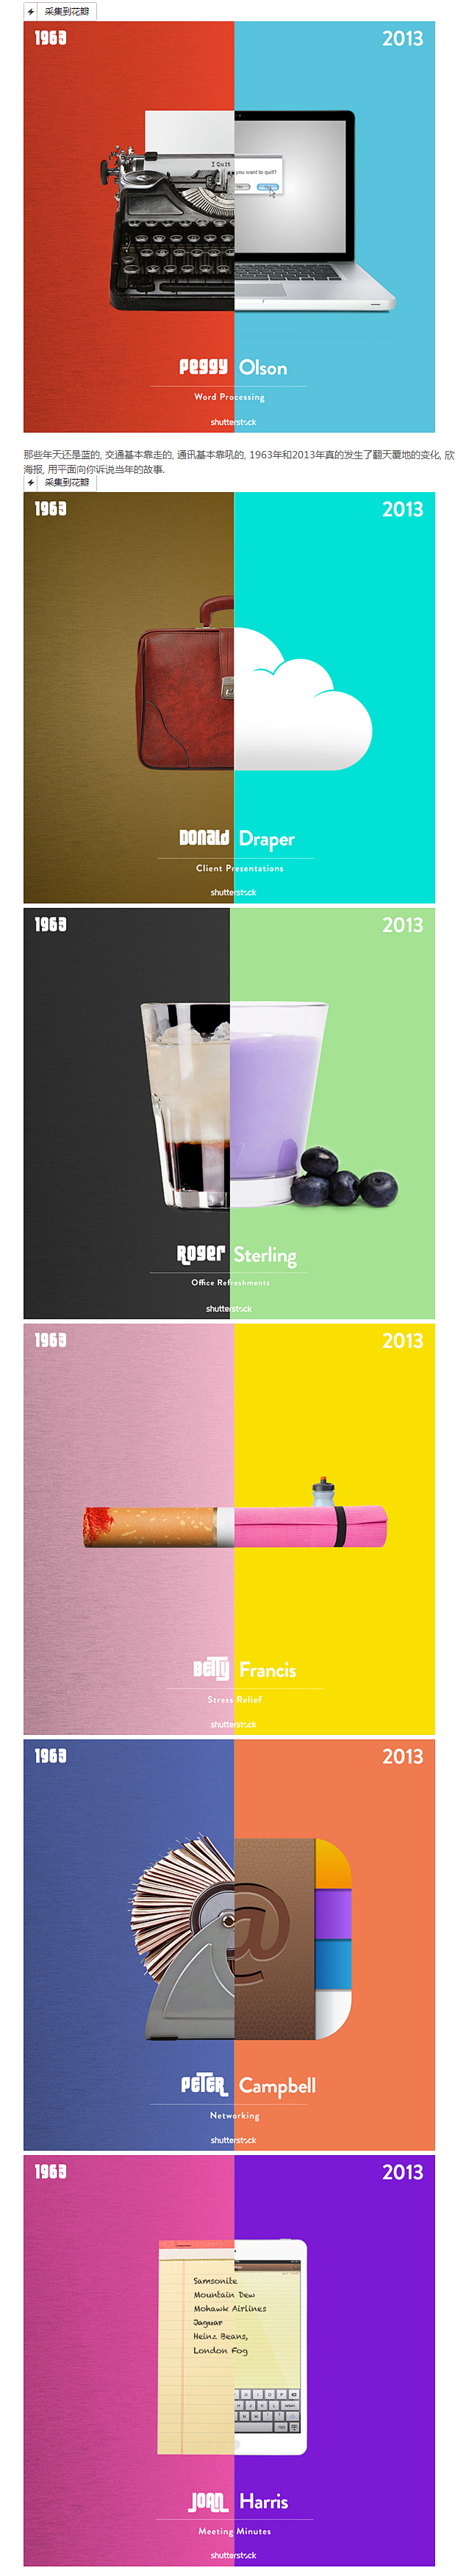 1963 vs 2013 创意海报设计 ...